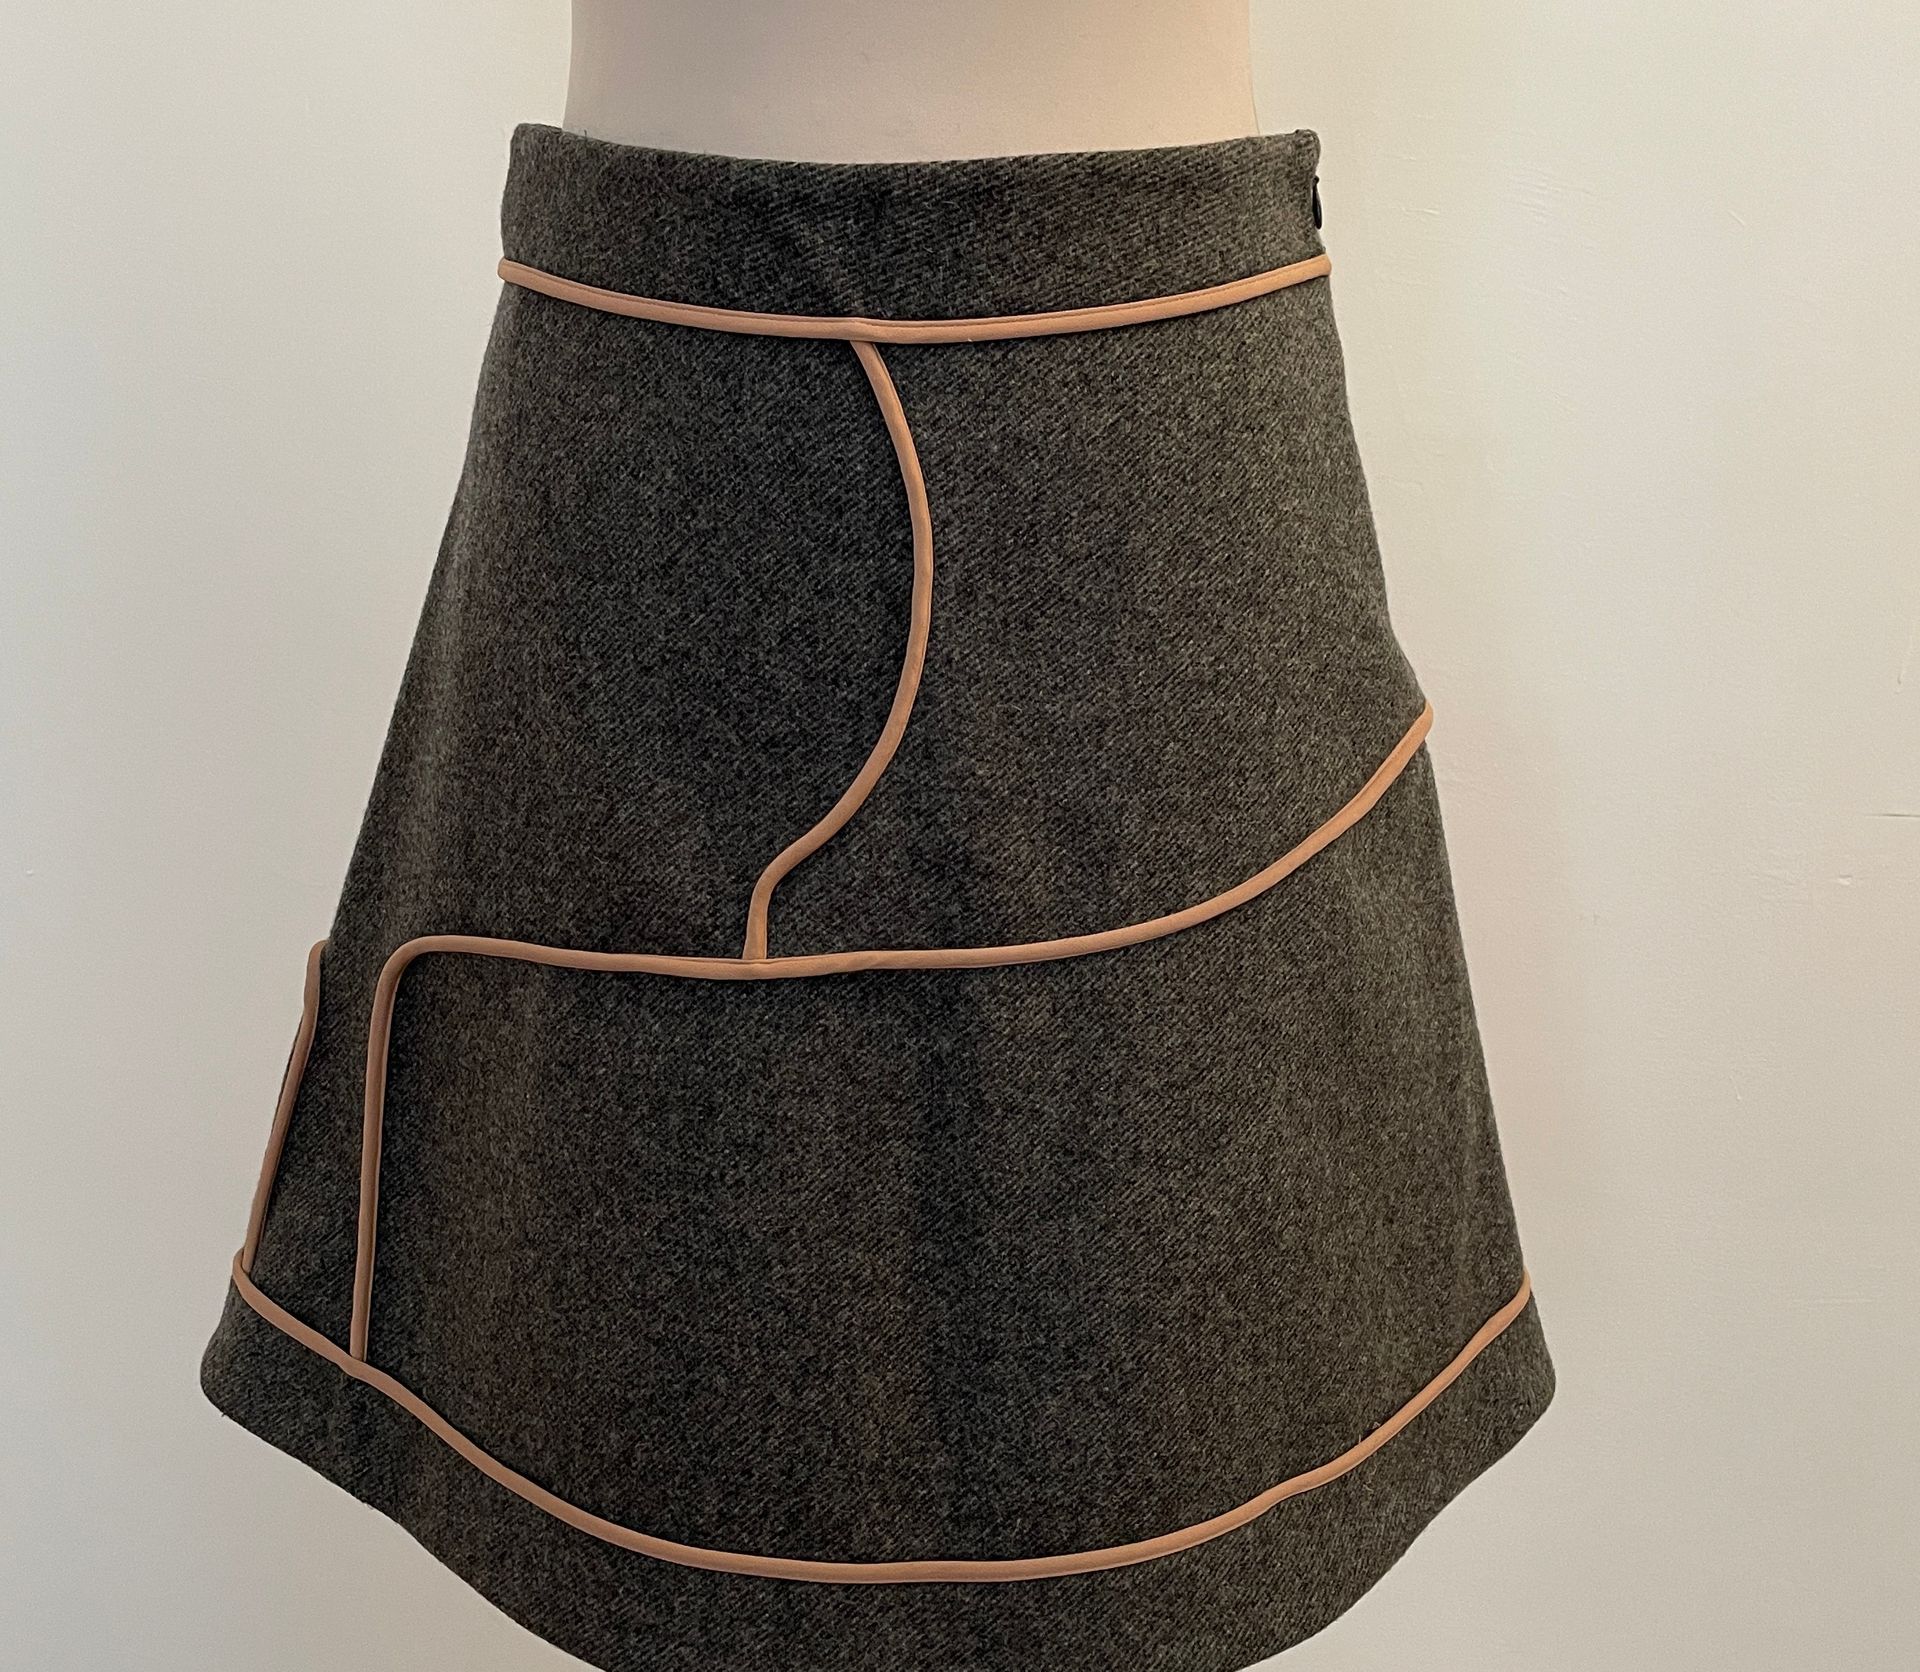 Null 丸子

灰色羊毛的梯形裙，有旧粉色的辫子。

T.38

腰部宽度35厘米，腰部至衣服底部的高度48厘米，衣服底部的宽度65厘米